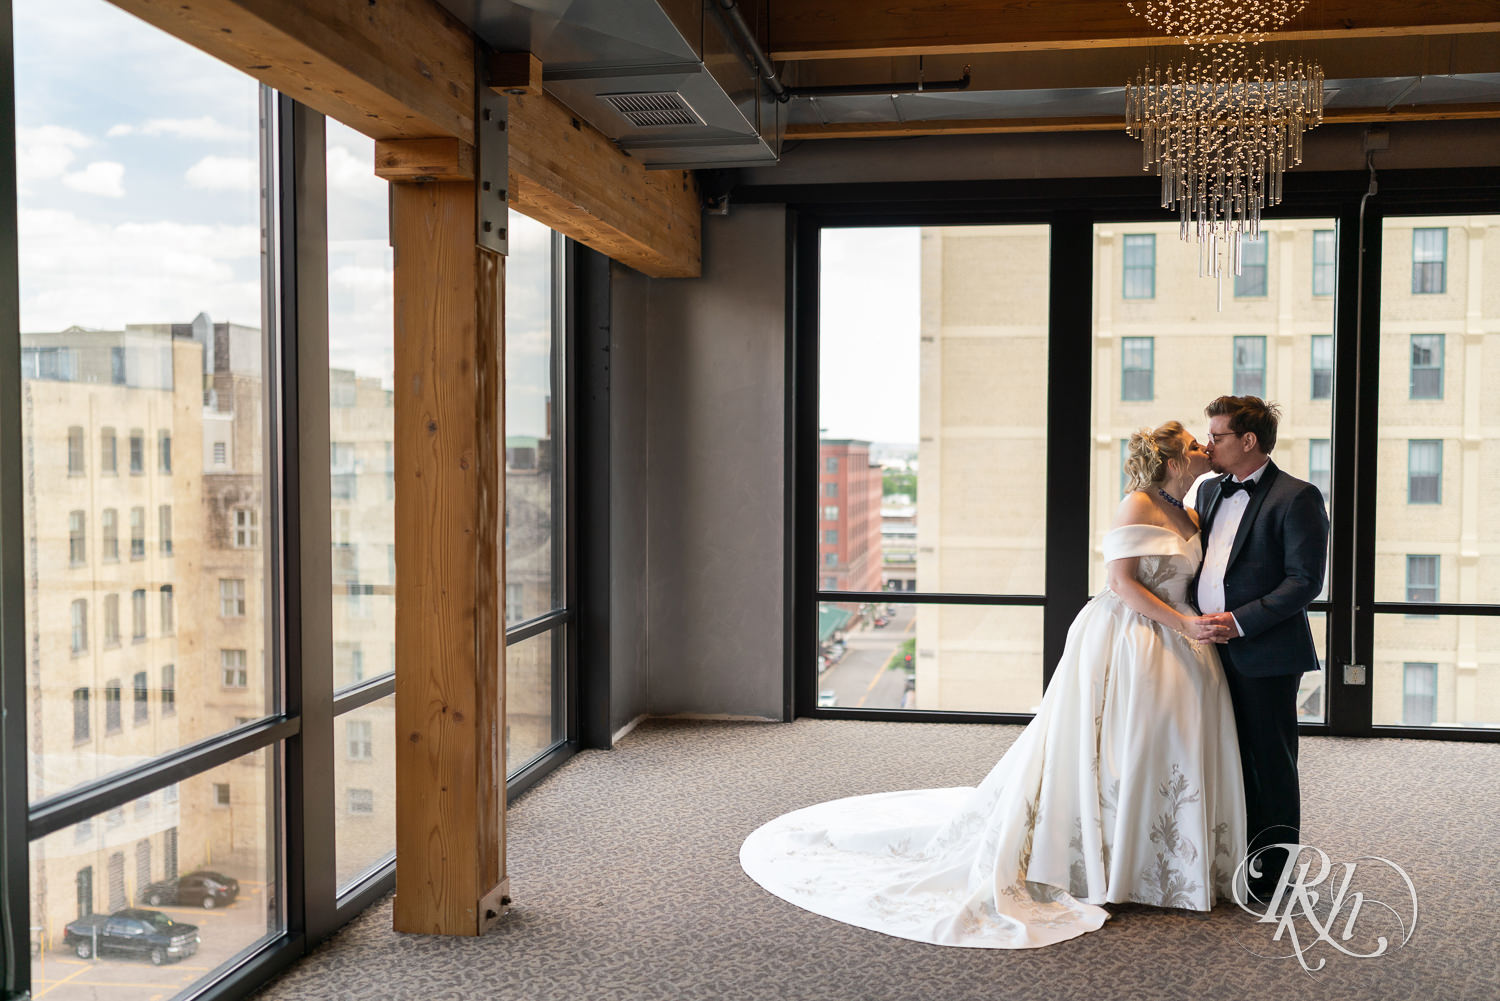 Bride and groom kiss under chandelier at Abulae in Saint Paul, Minnesota.